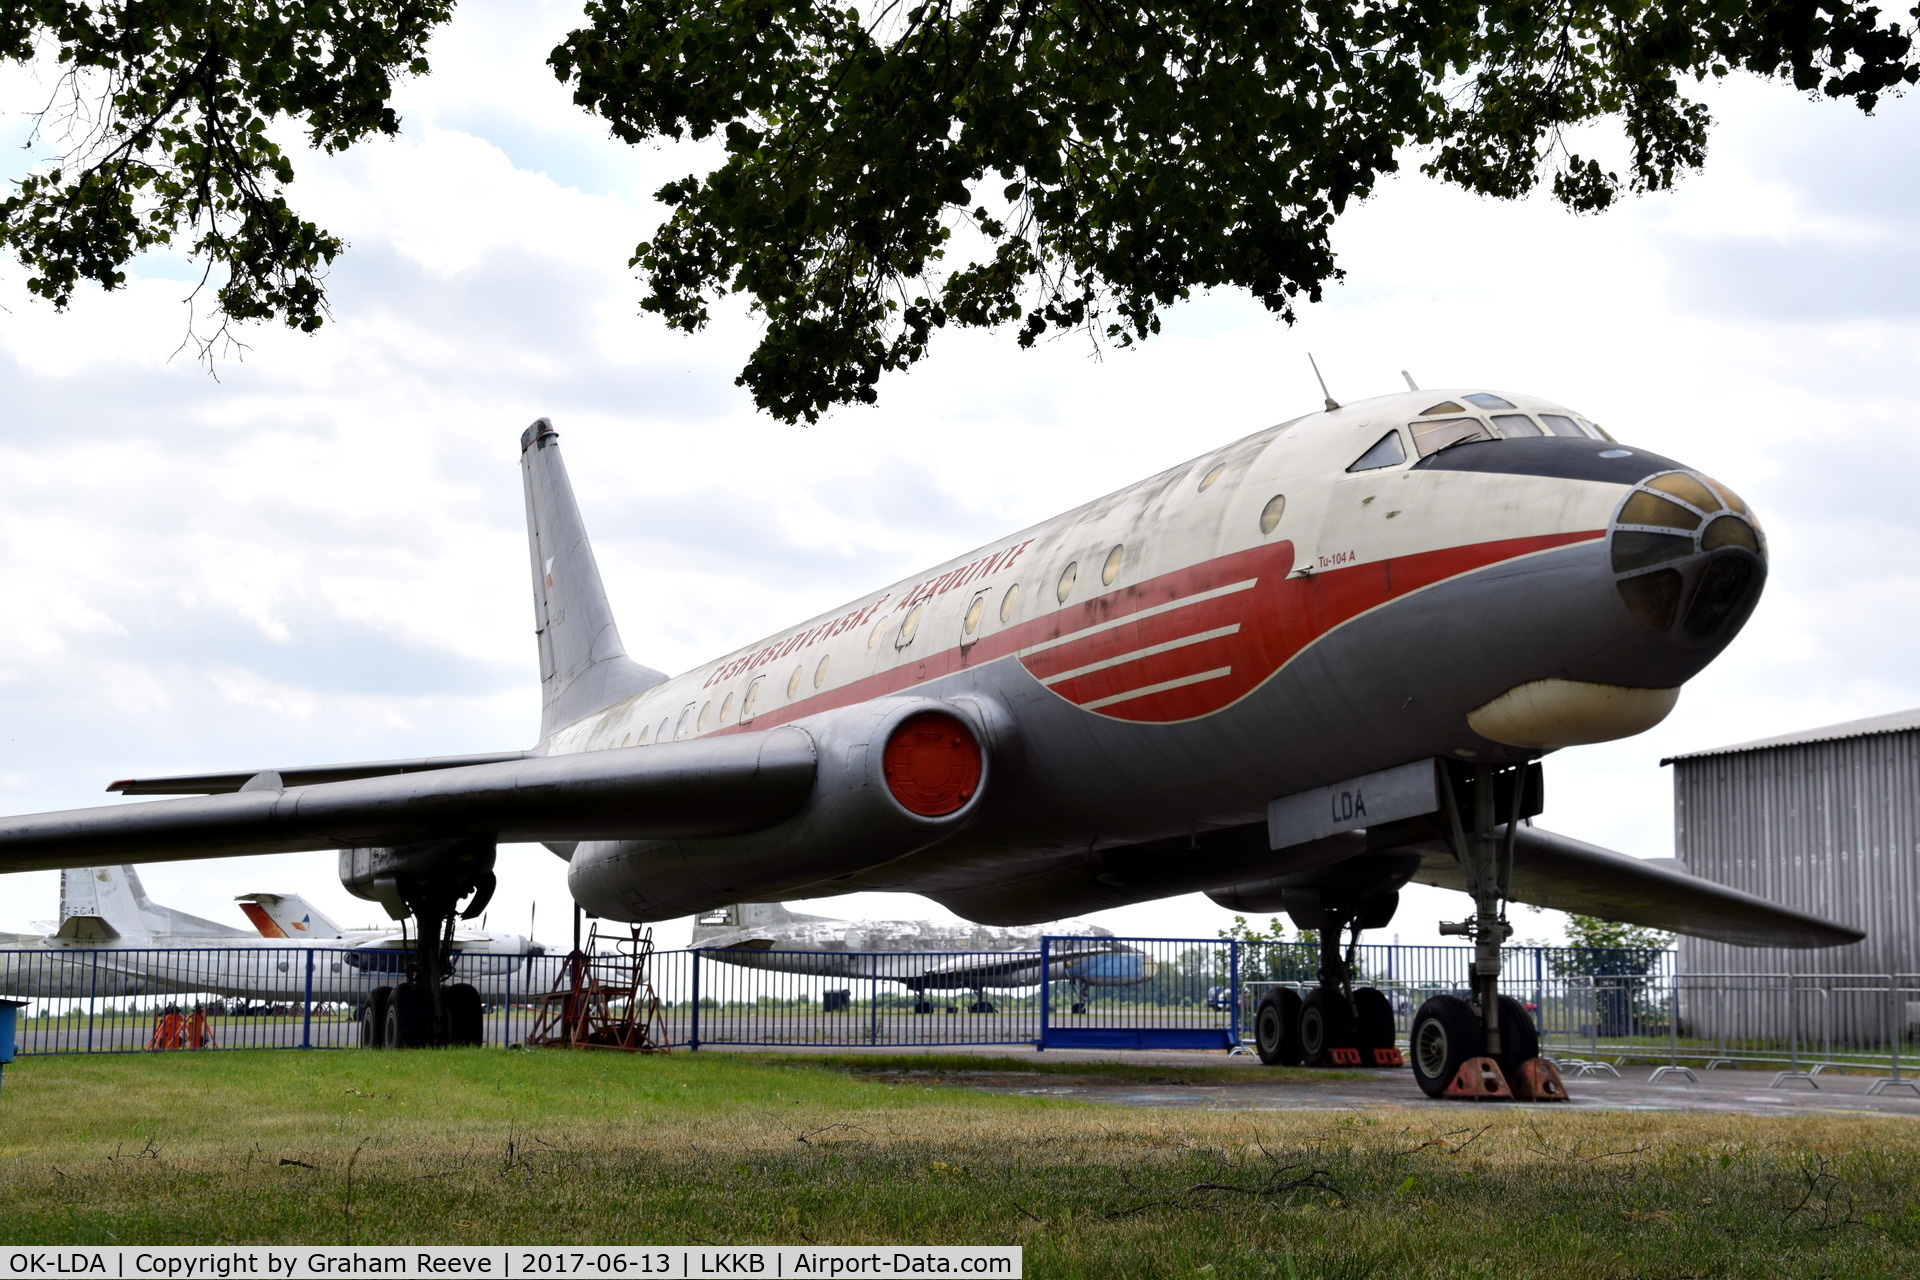 OK-LDA, 1957 Tupolev Tu-104A C/N 76600503, Displayed at the 